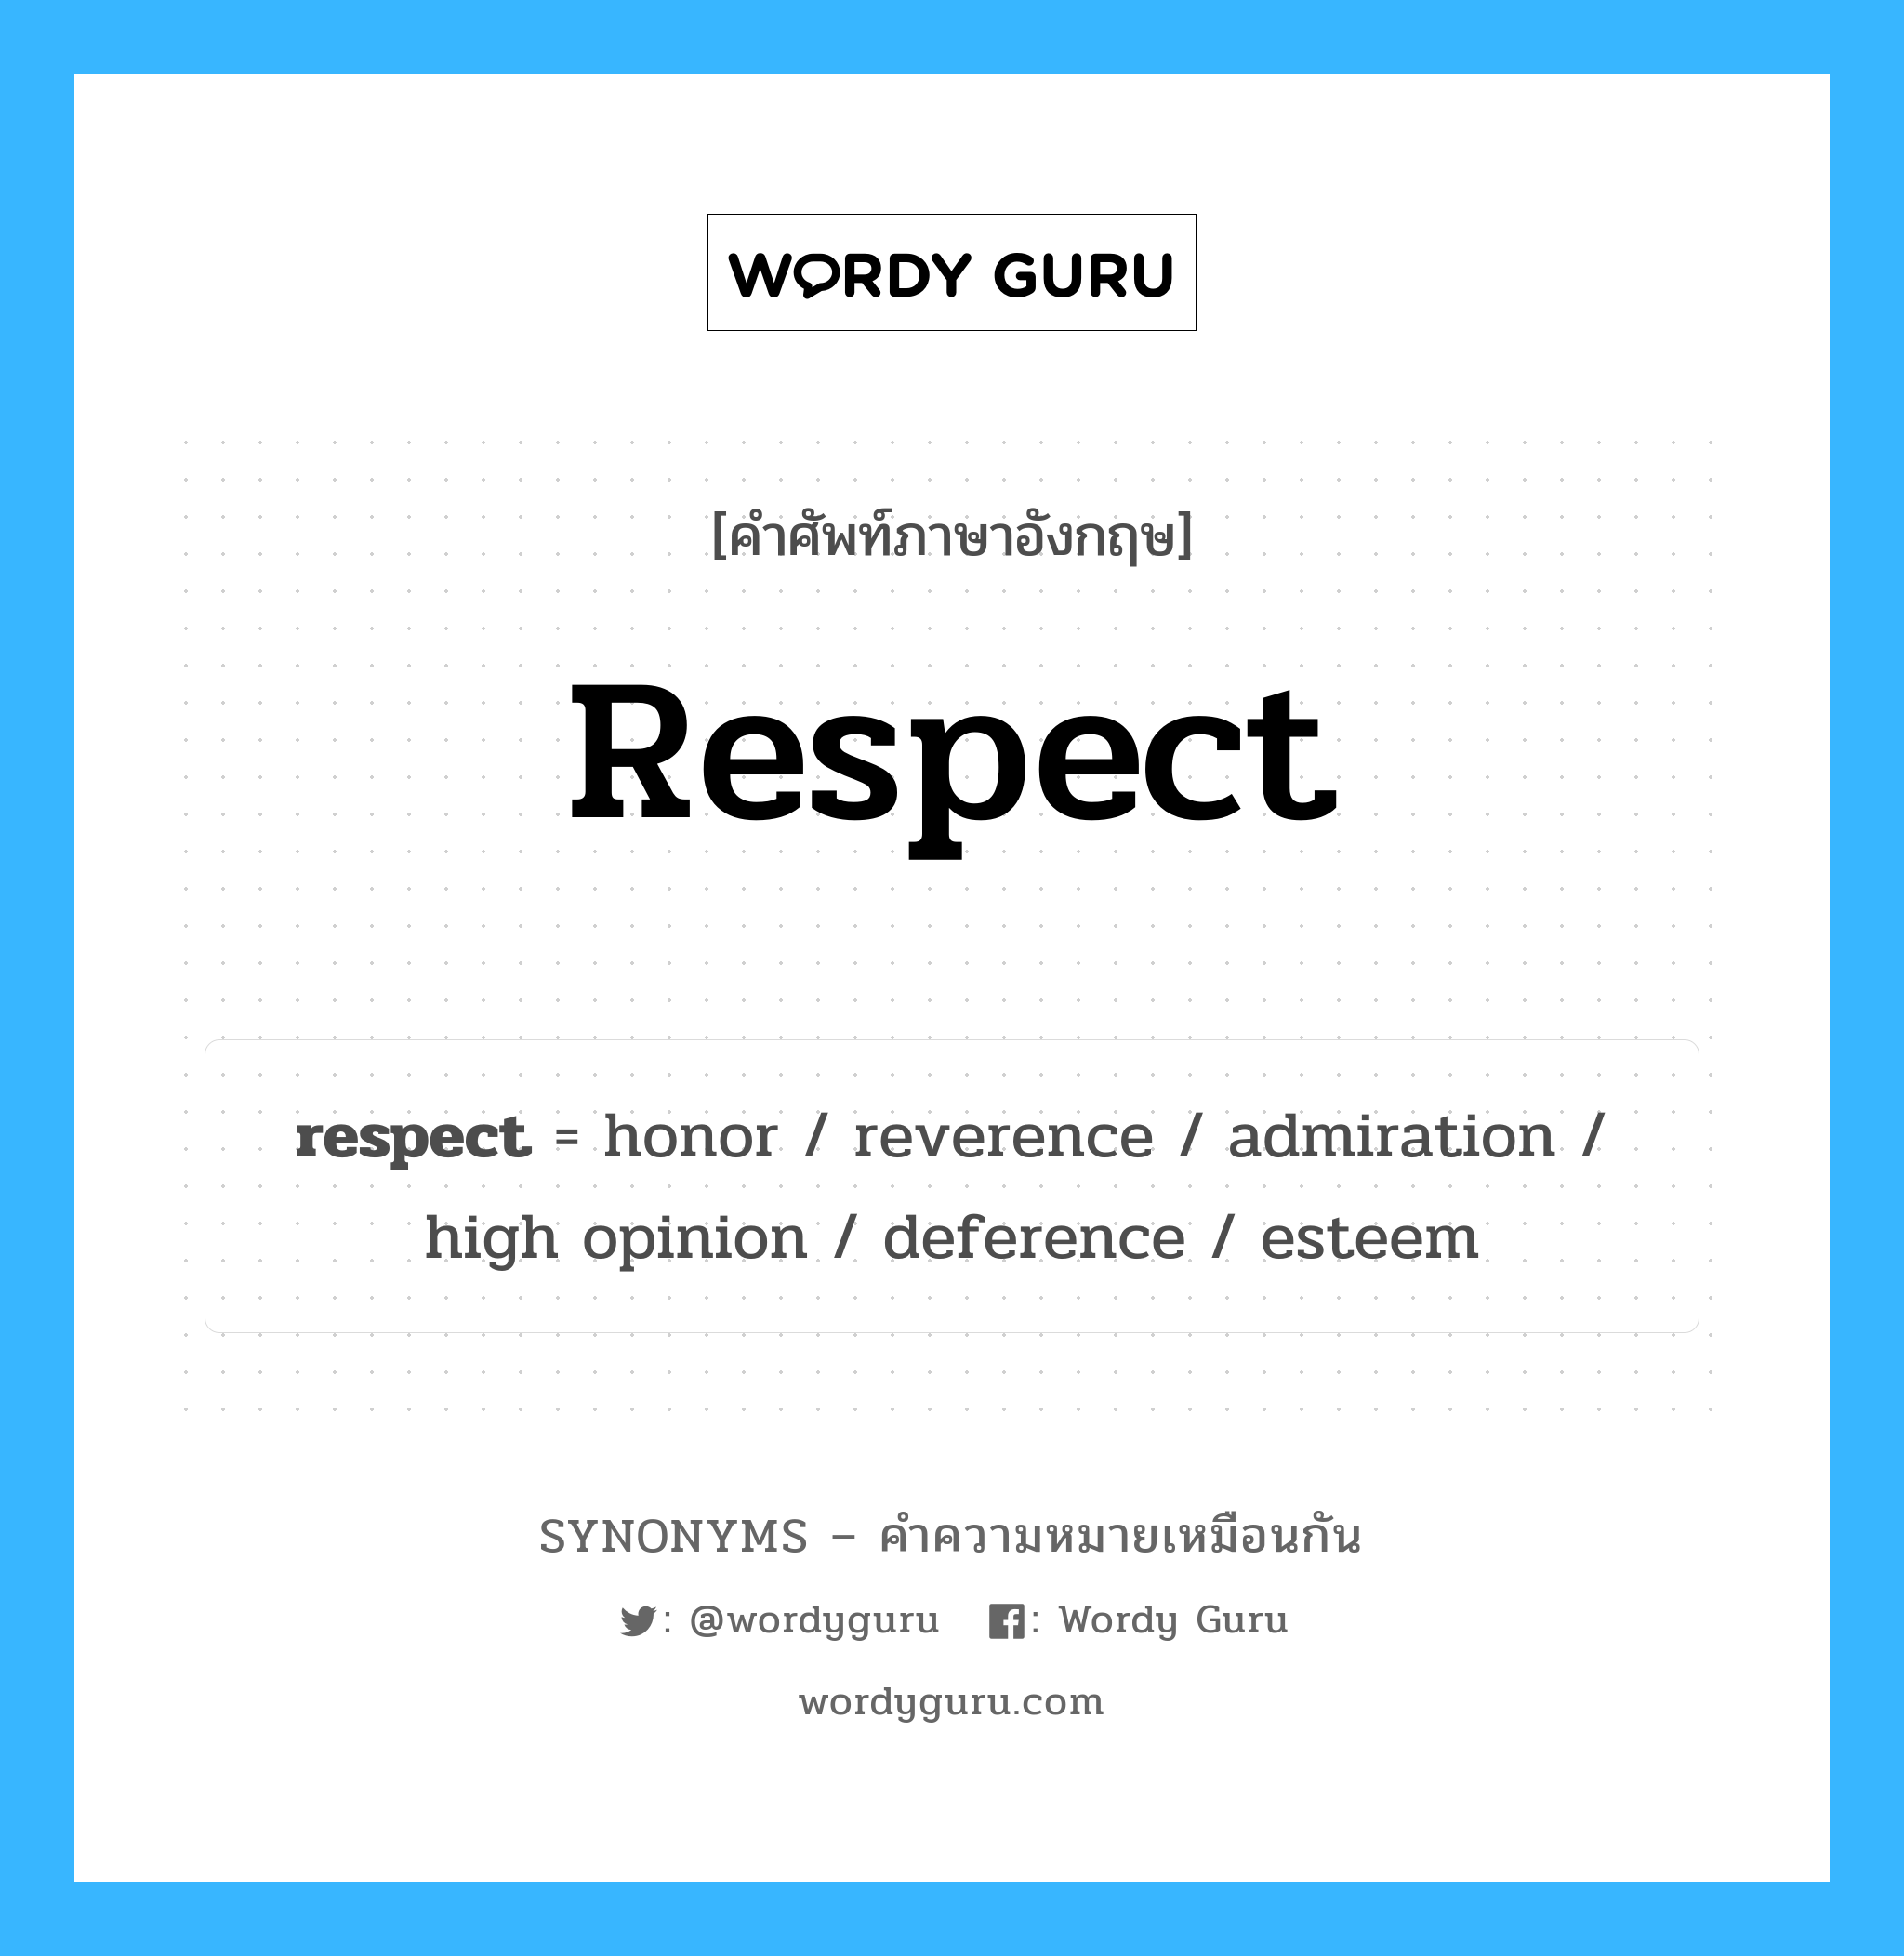 honor เป็นหนึ่งใน praise และมีคำอื่น ๆ อีกดังนี้, คำศัพท์ภาษาอังกฤษ honor ความหมายคล้ายกันกับ respect แปลว่า เกียรติ หมวด respect